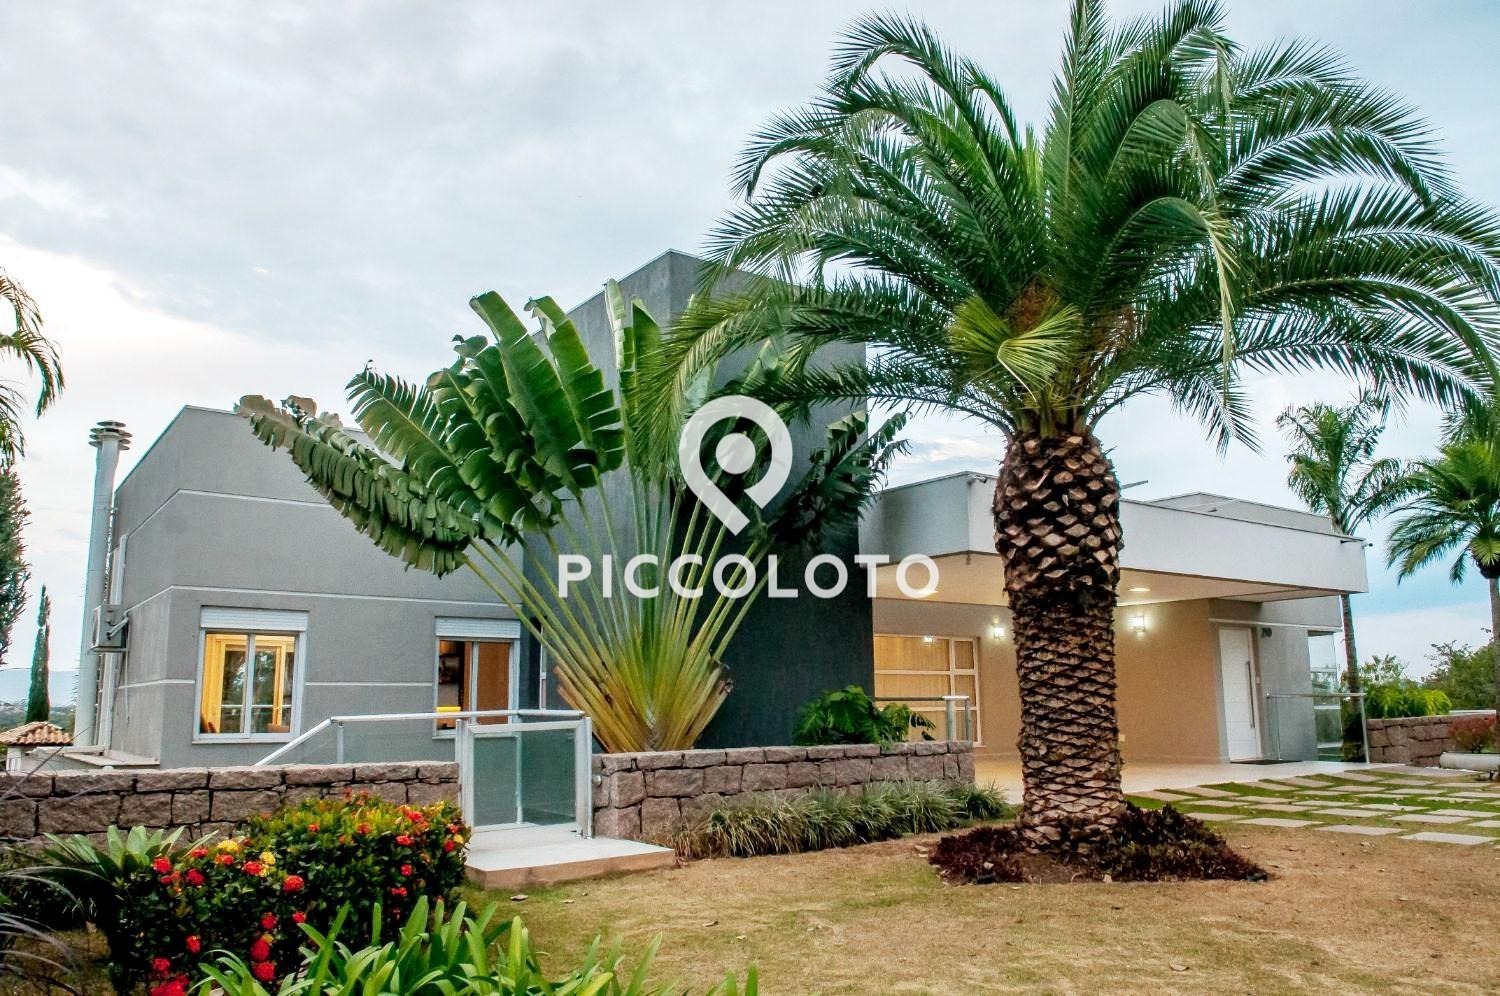 Piccoloto - Casa à venda no Alfa em Itupeva